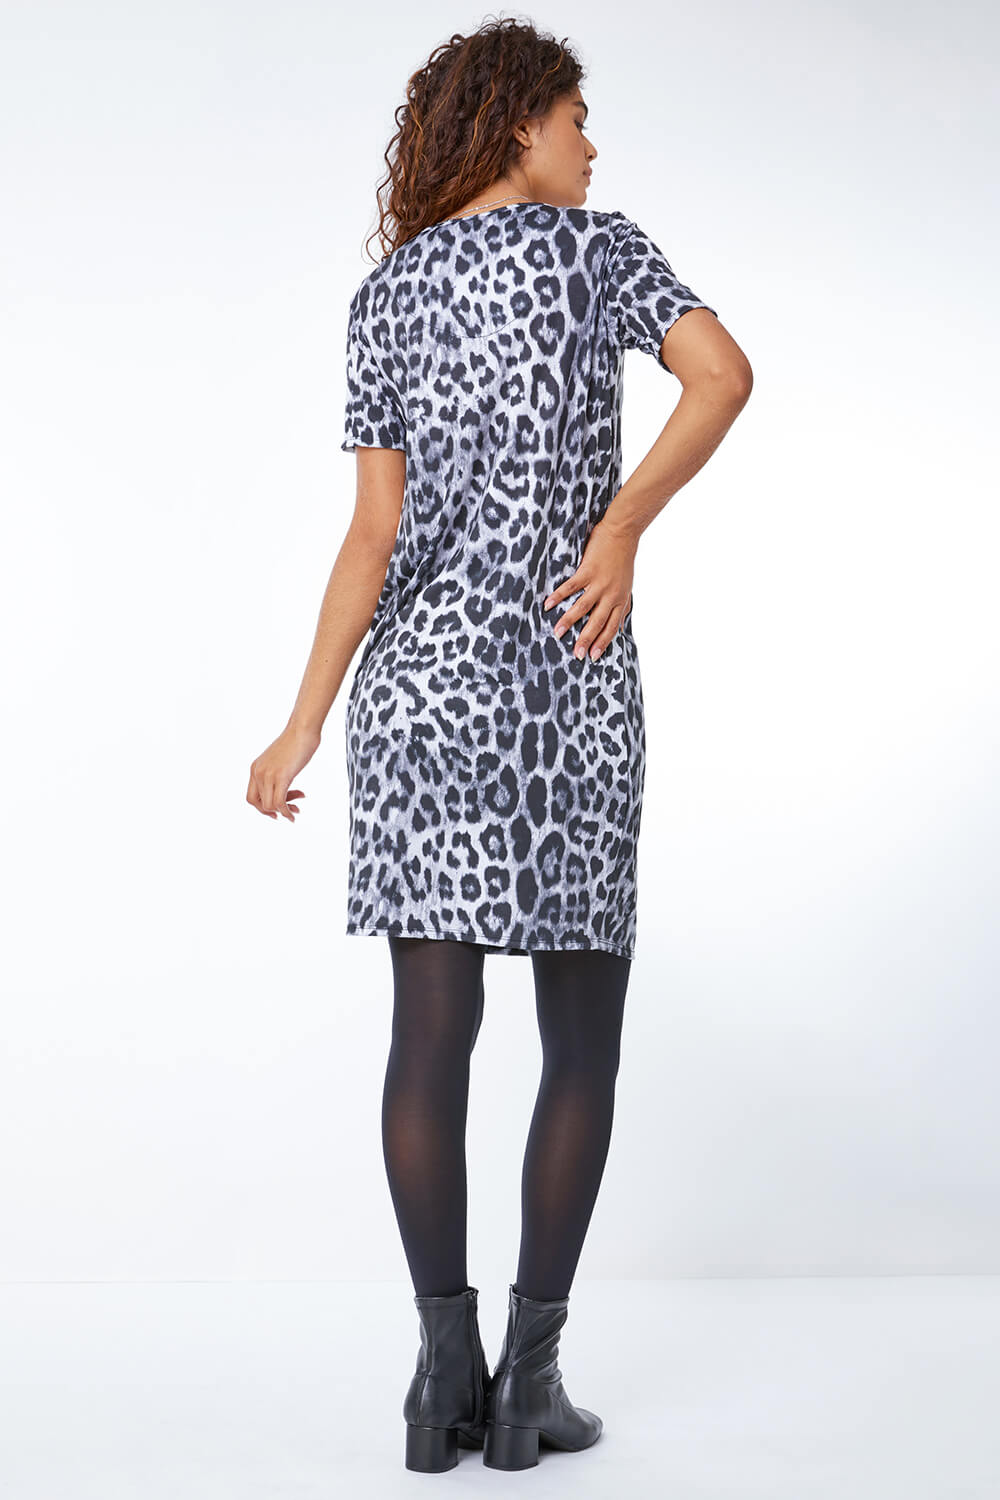 Grey Animal Leopard Print Stretch Dress, Image 3 of 5